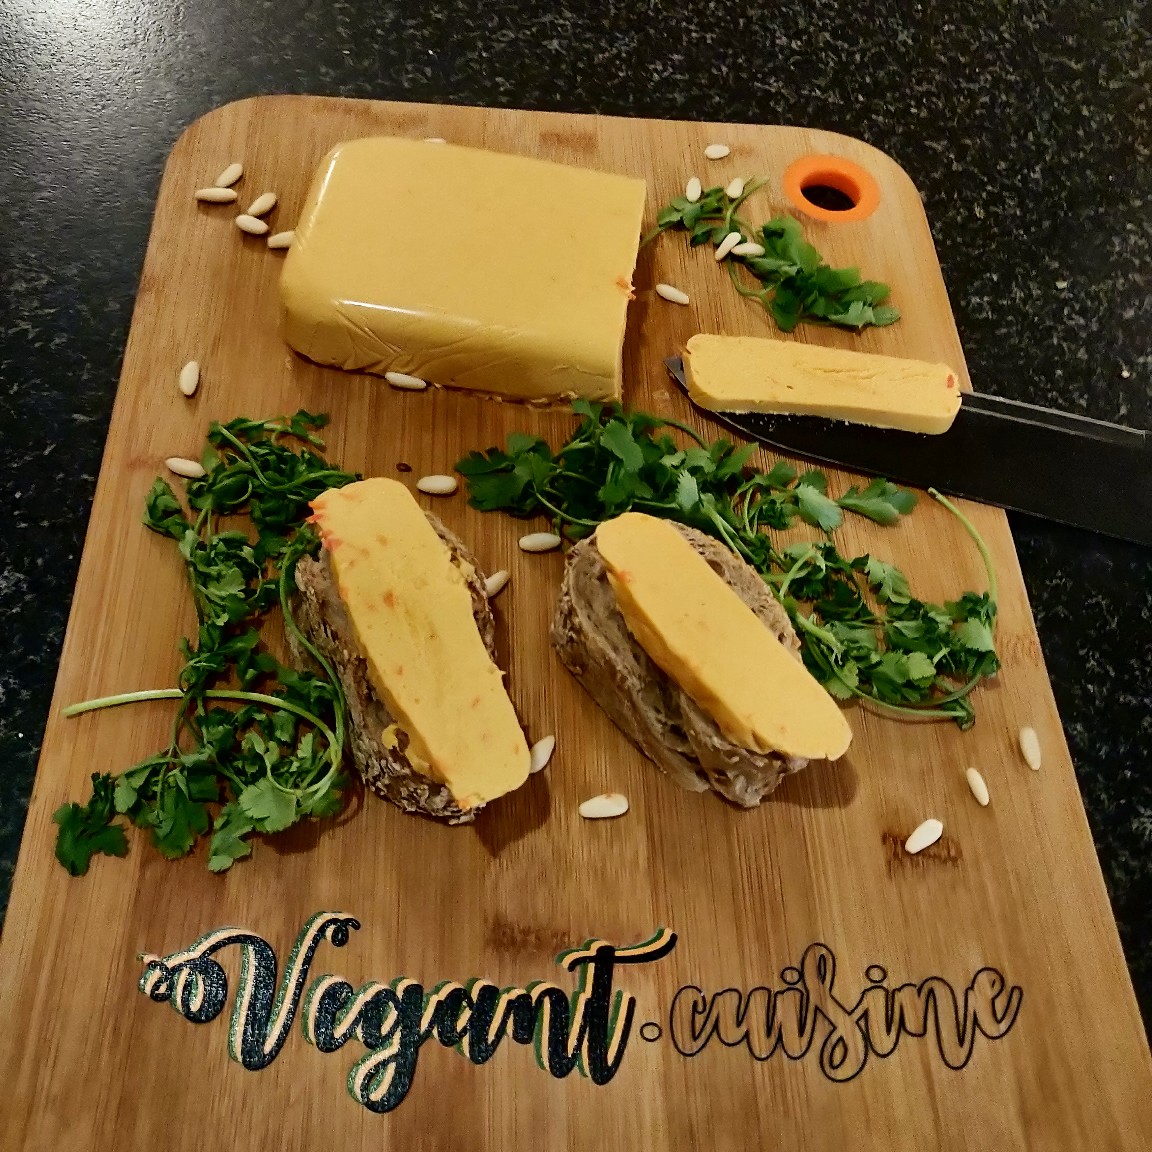 Vegant - Vegan cheddar cheese